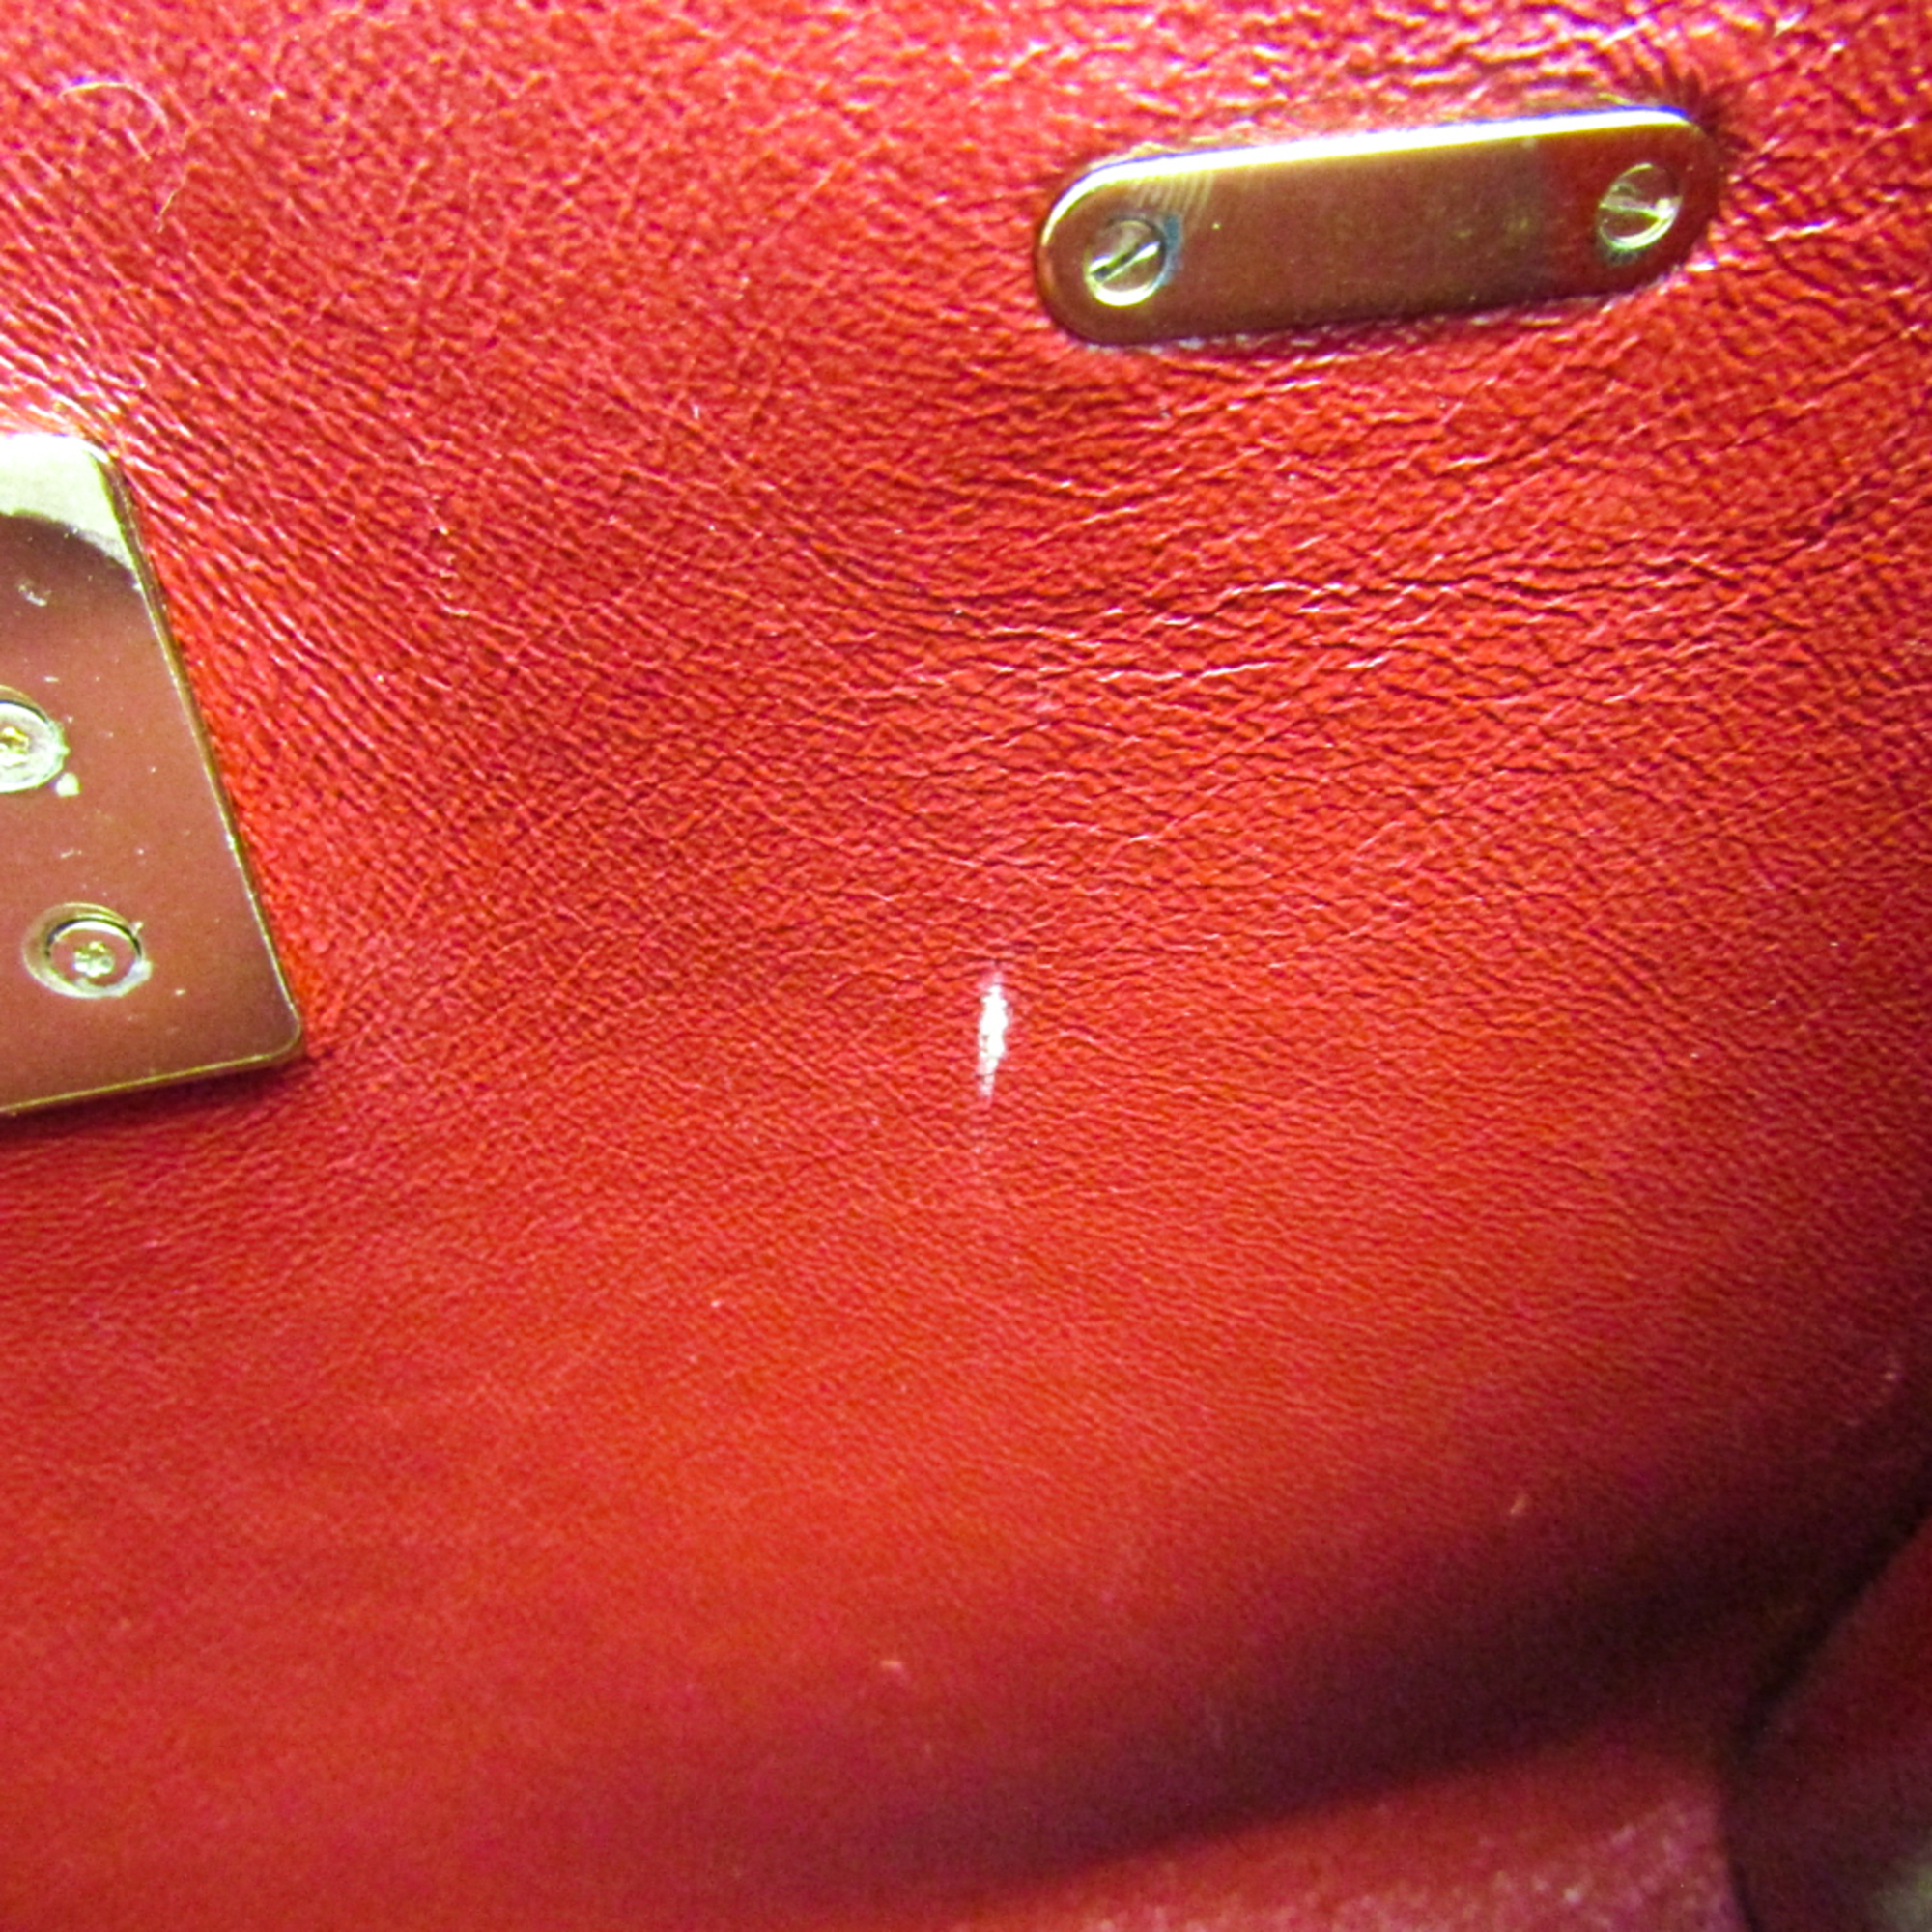 Salvatore Ferragamo Gancini Juliet 21 D658 Women's Leather Handbag Rose Pink